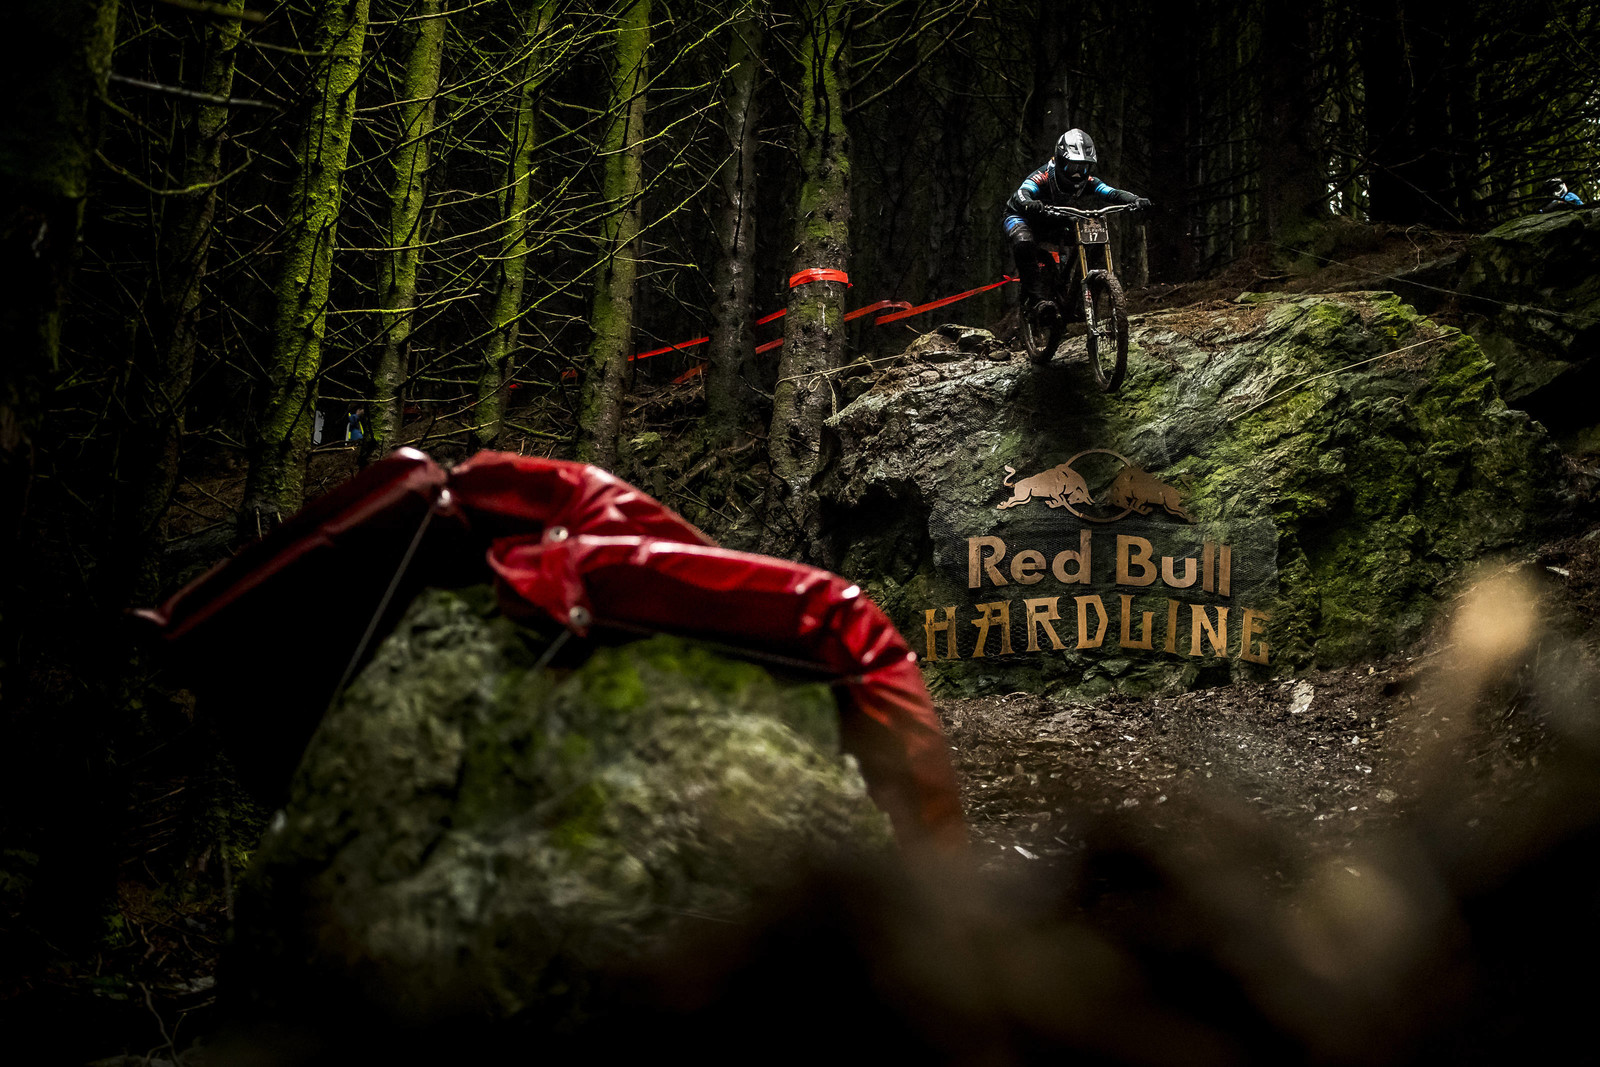 Red Bull Hardline Riders Announced Bike Press Release